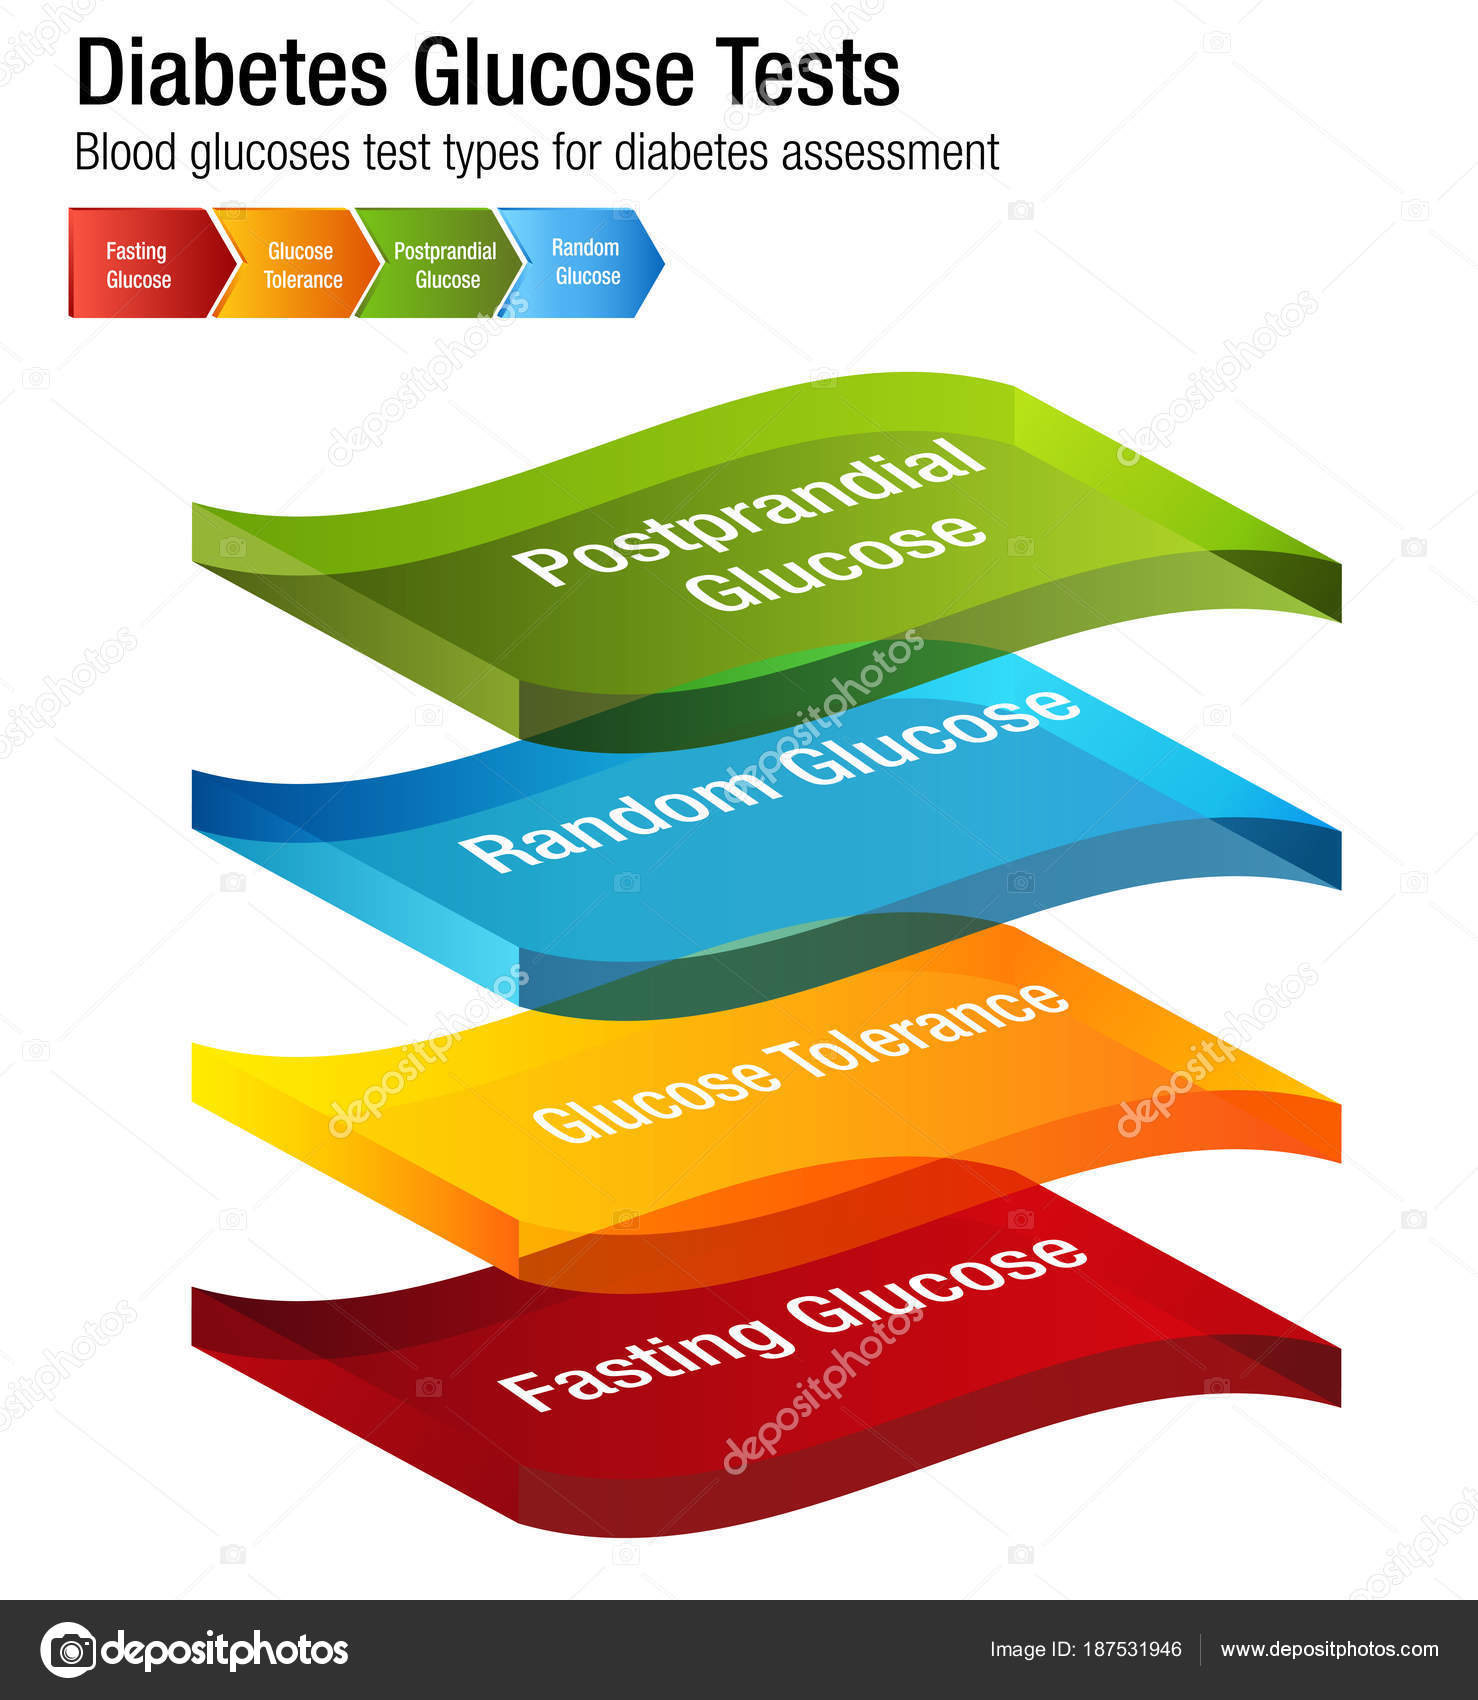 Blood Glucose Reading Chart